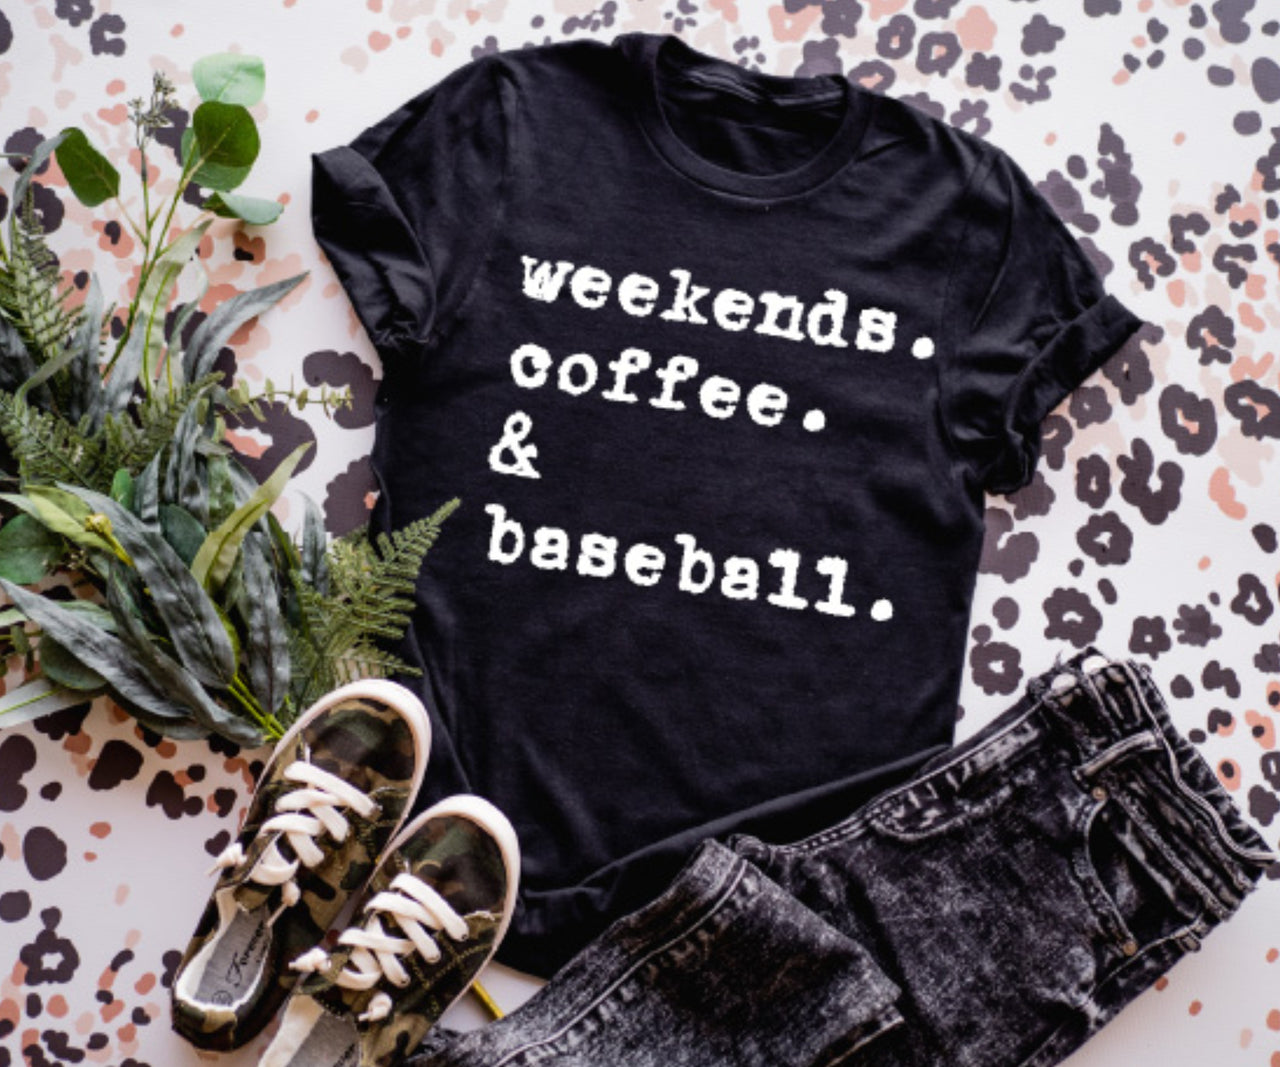 Adult - Unisex Tee (Weekends Coffee & Baseball)